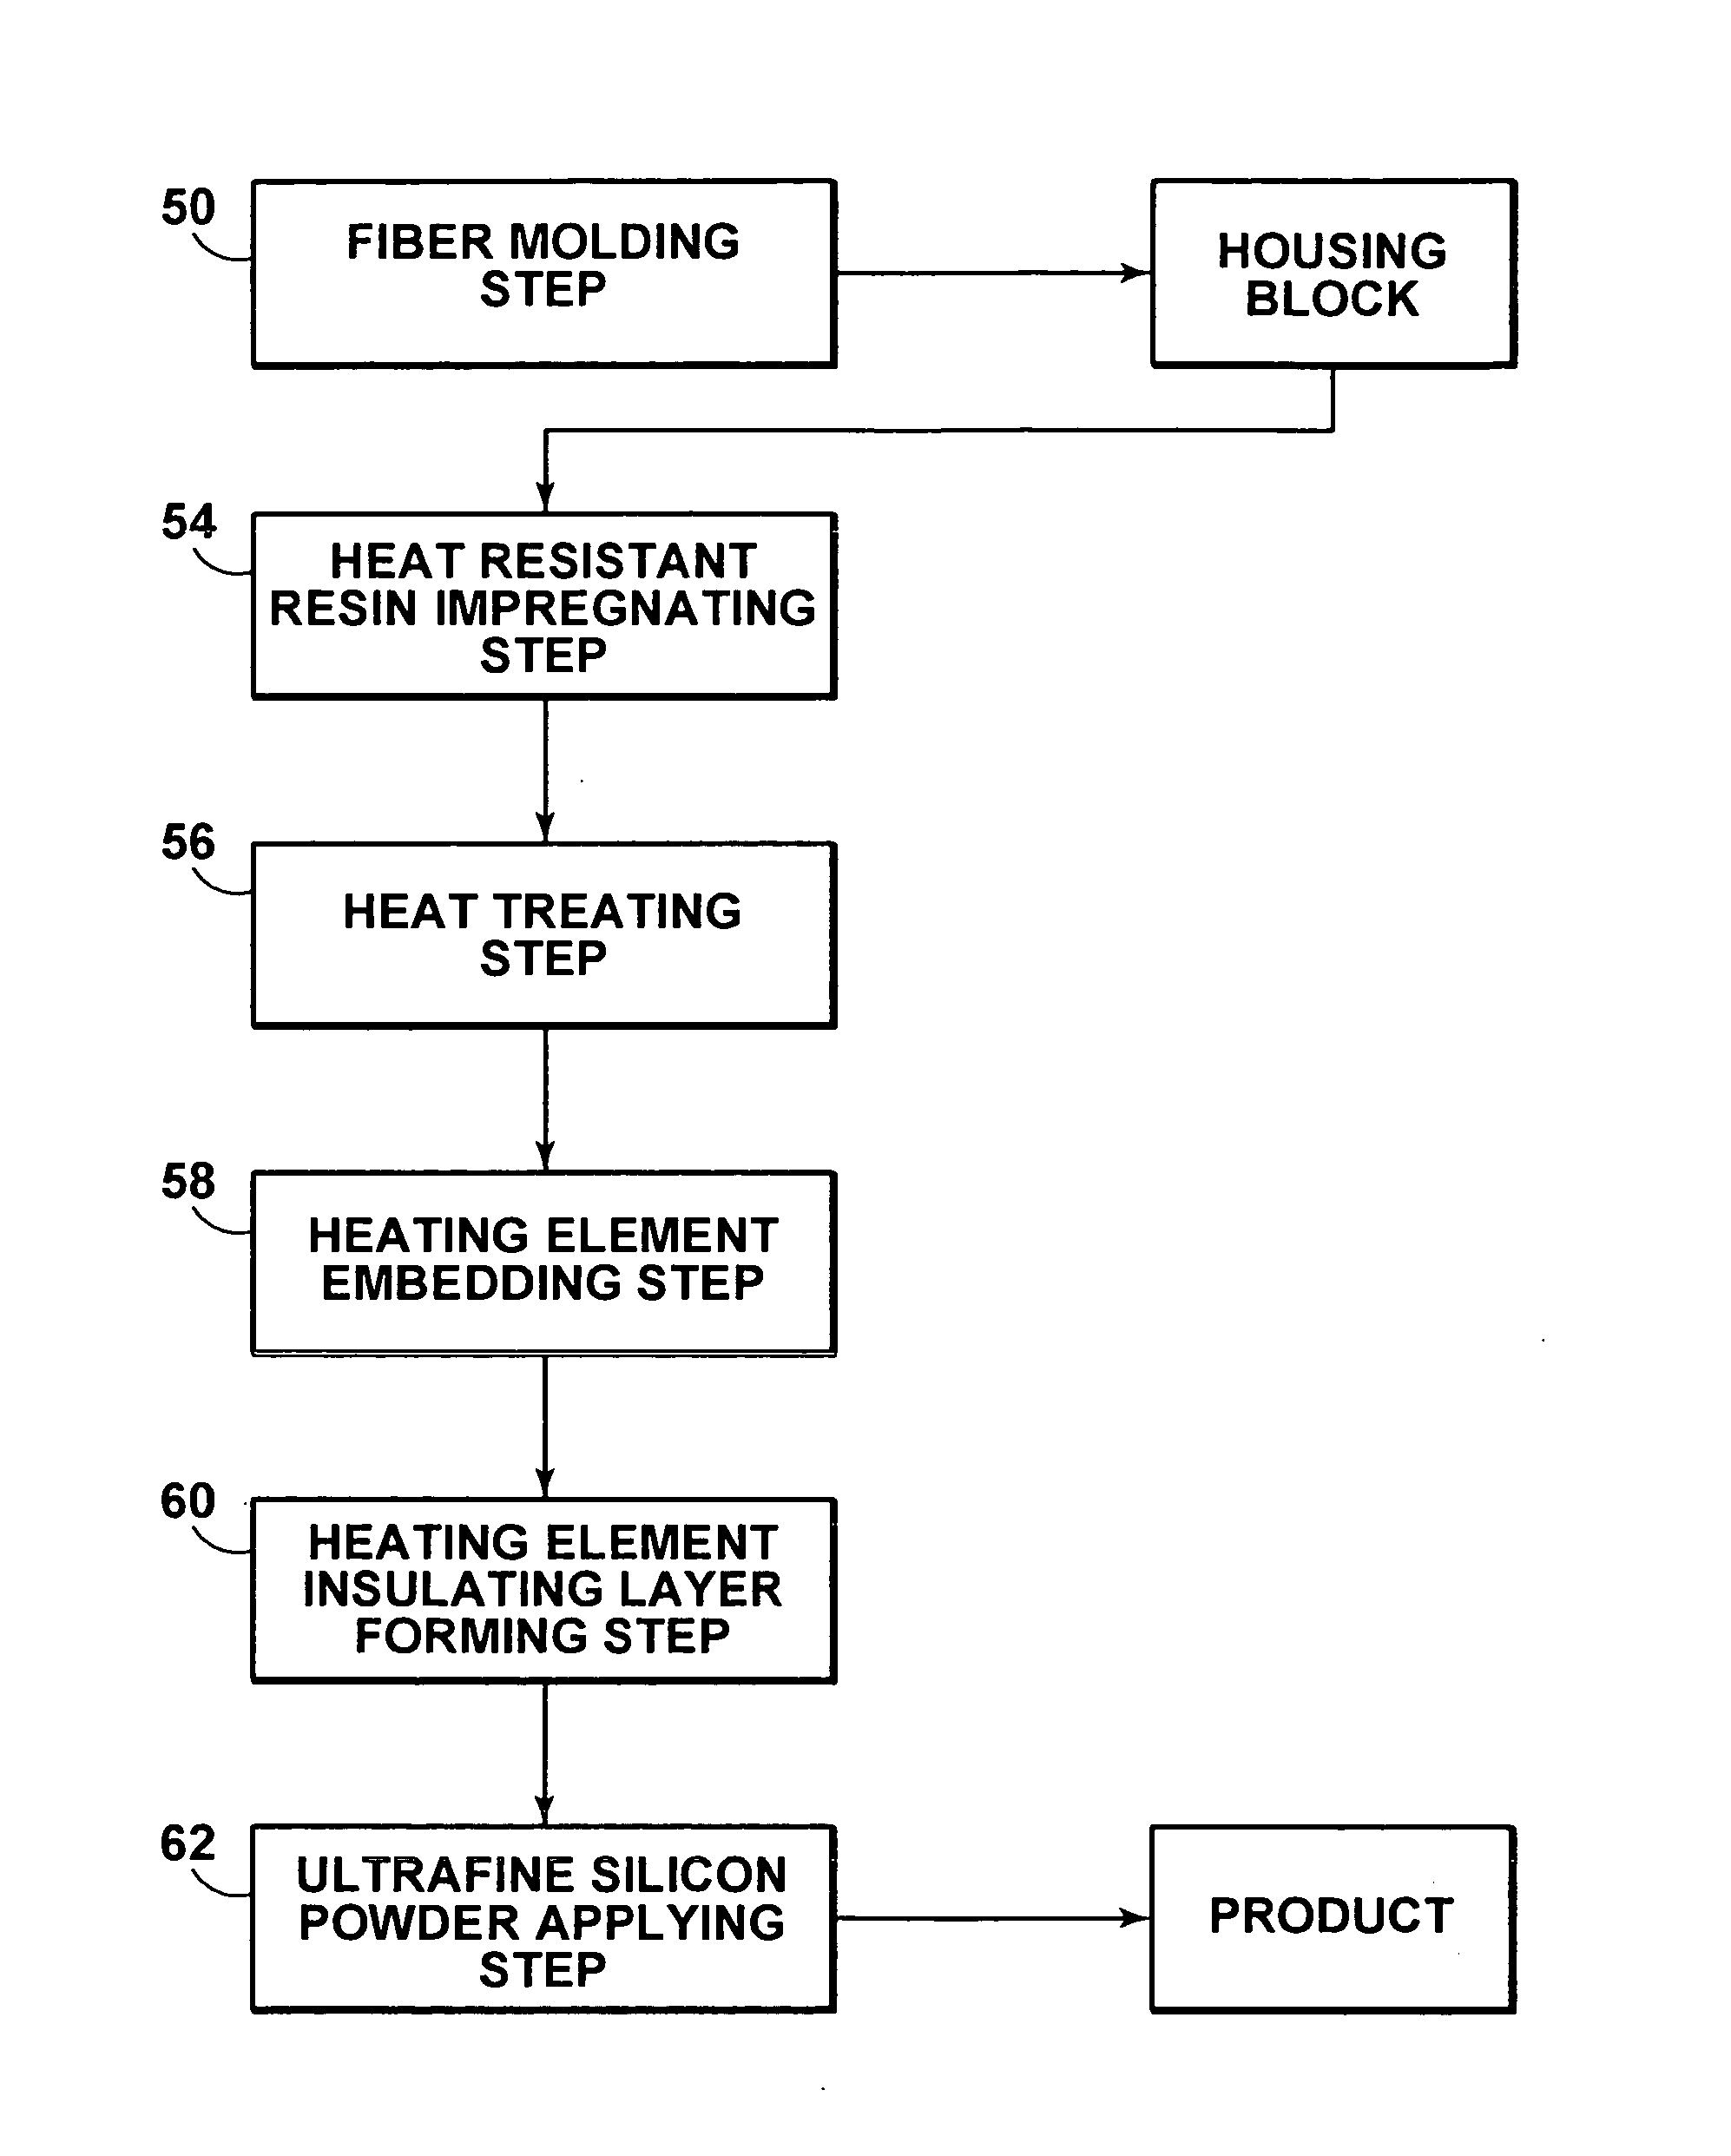 Heater unit manufacturing method